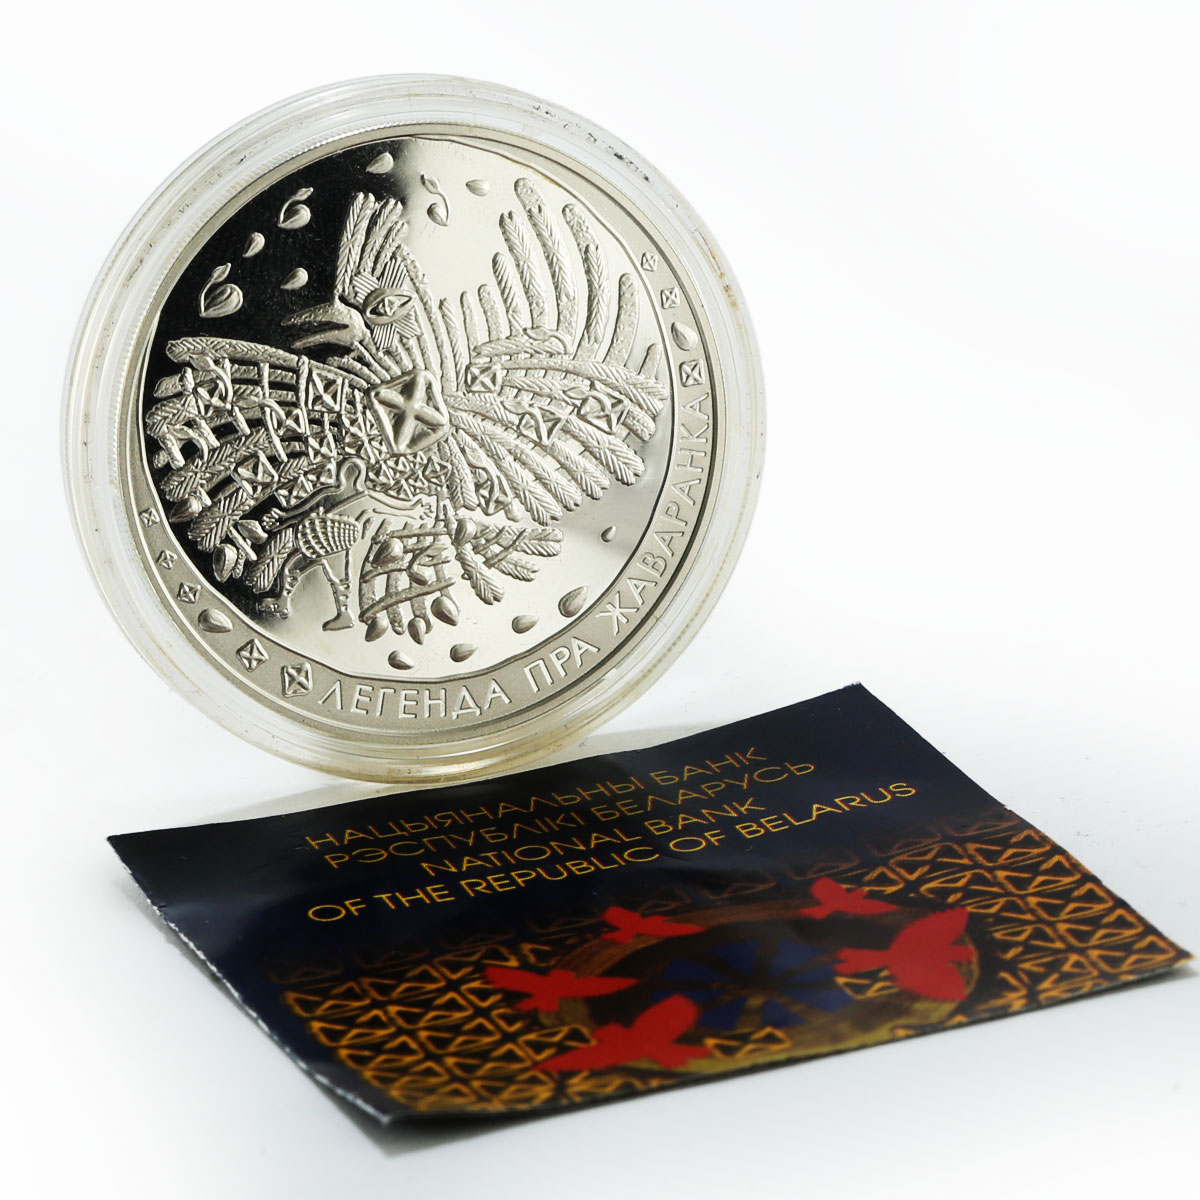 Belarus 20 rubles Folk Legends Series The Skylark proof silver coin 2009